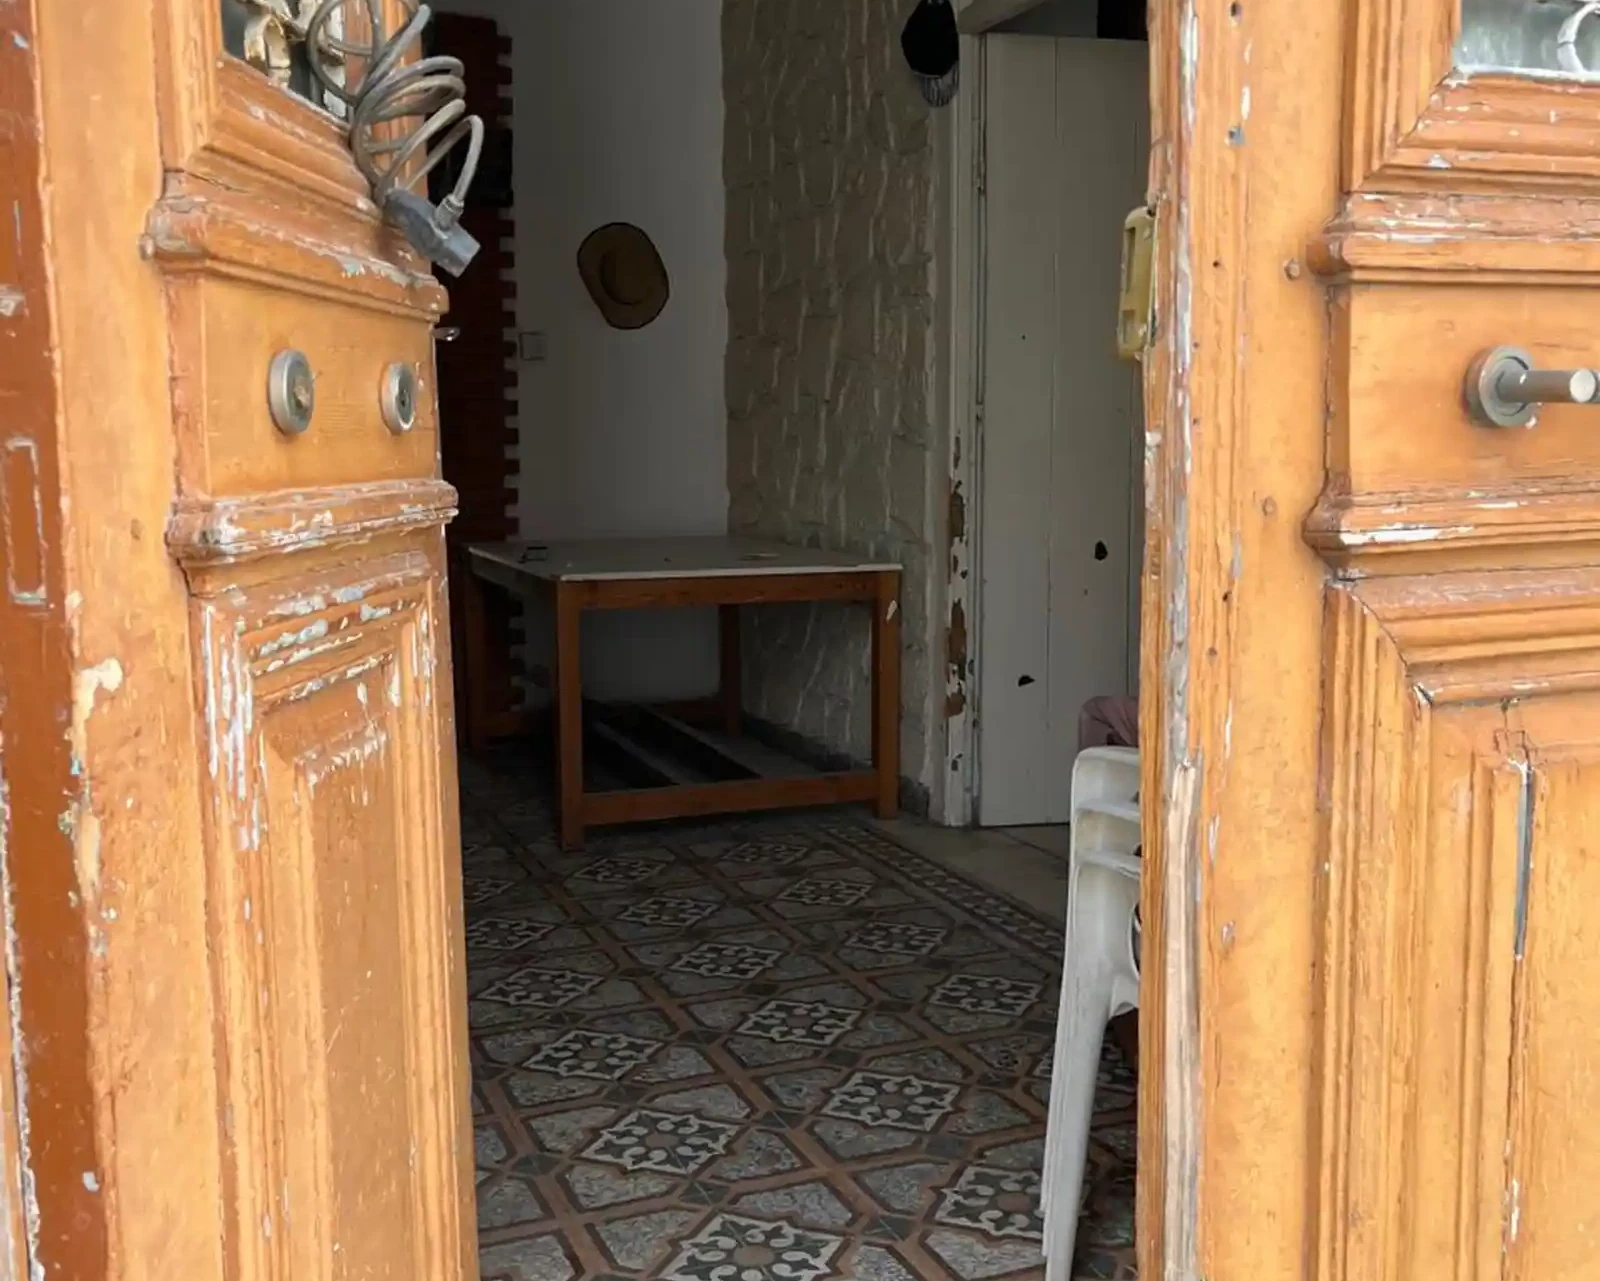 4-bedroom semi-detached fоr sаle €220.000, image 1